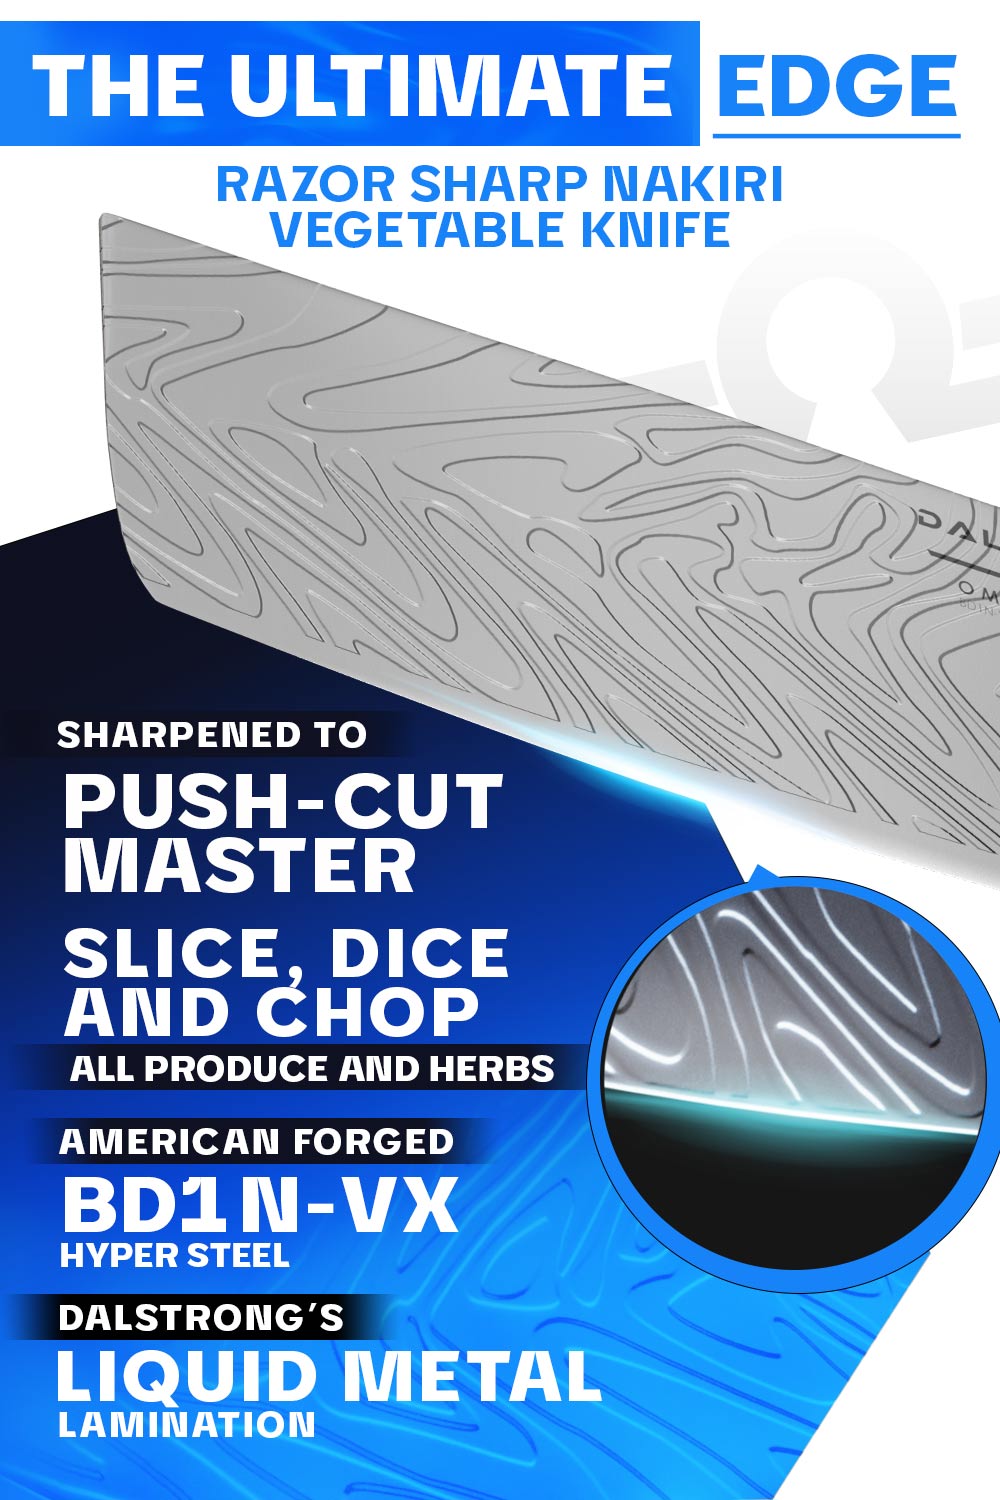 Dalstrong omega series 7 inch nakiri knife featuring it's razor sharp blade.